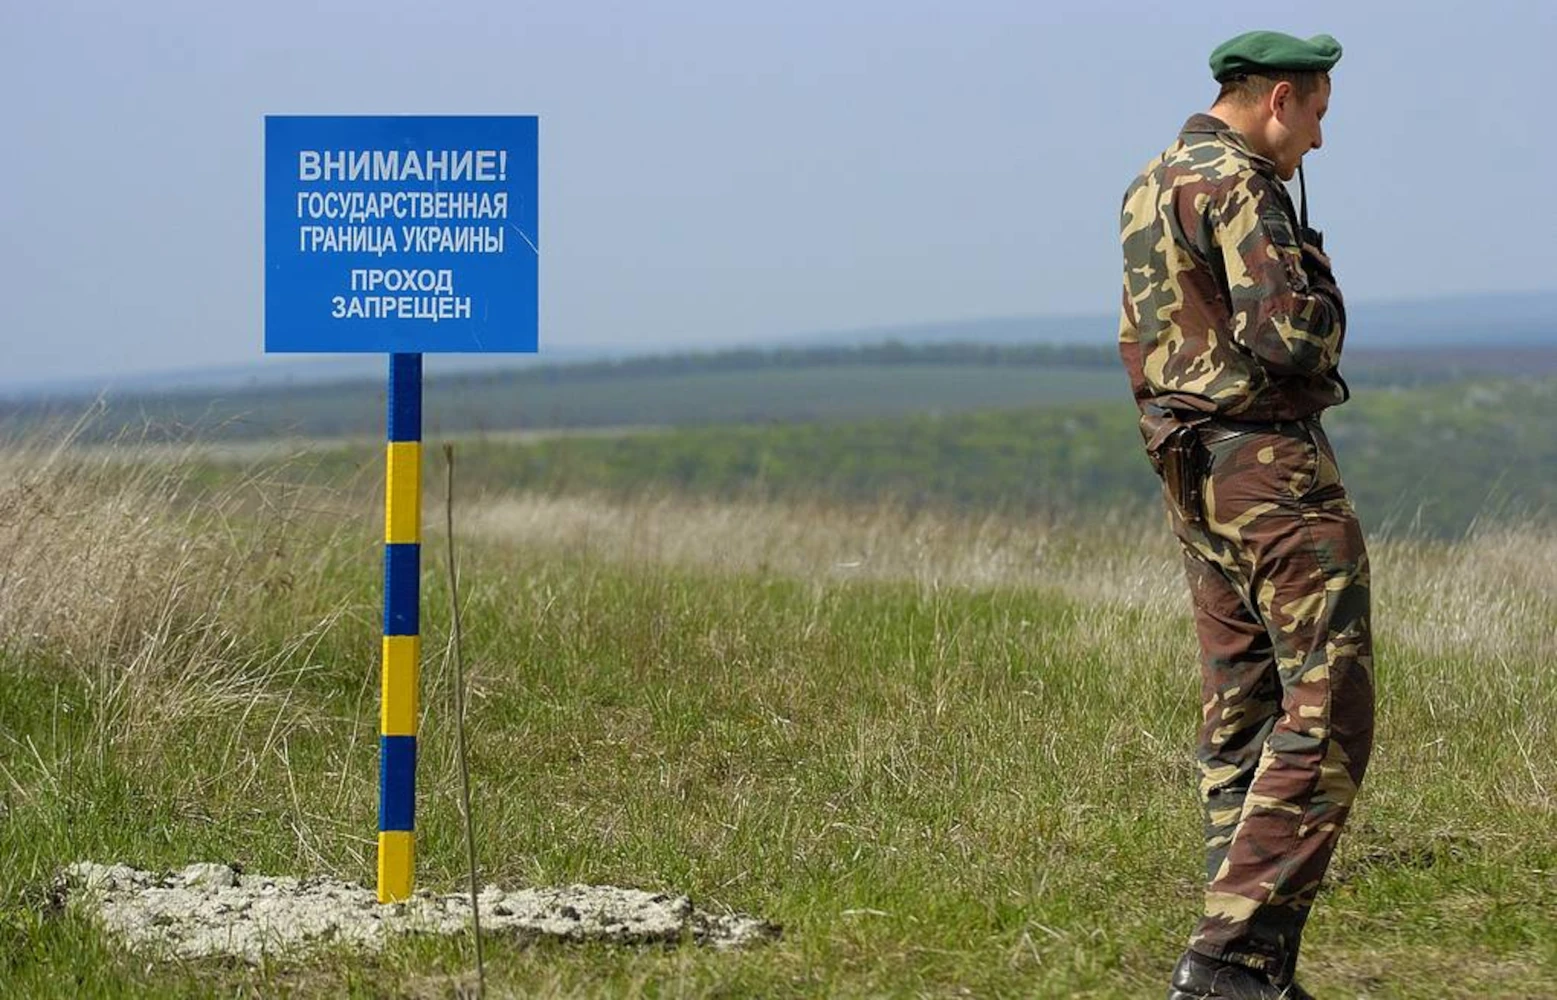 Border of Russia and Ukraine